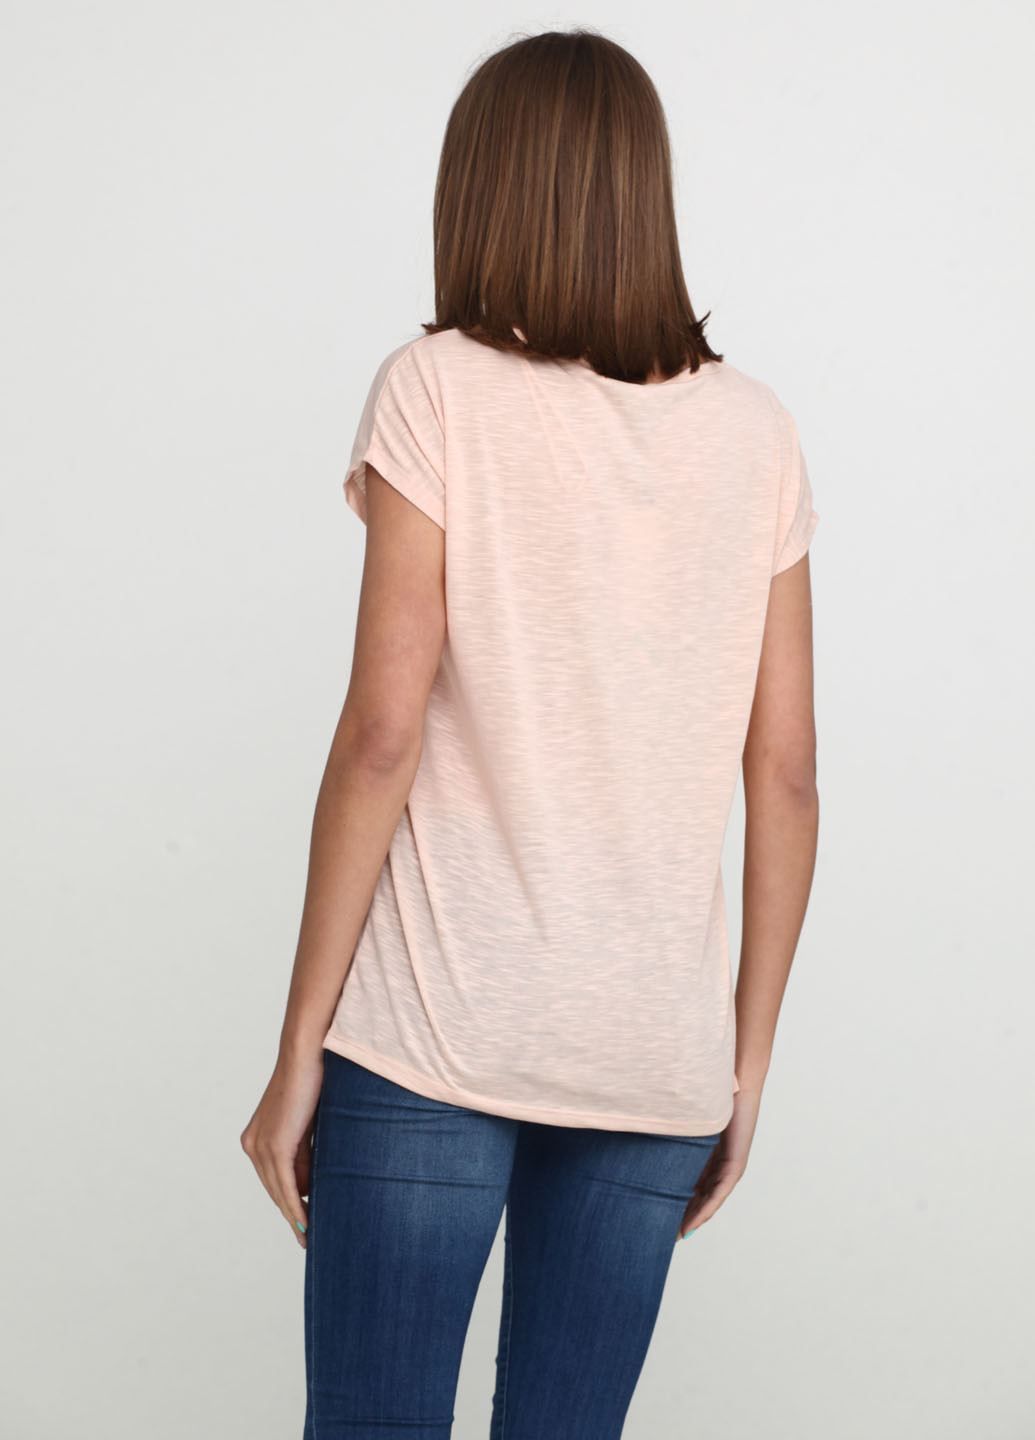 Светло-розовая летняя футболка Sirup